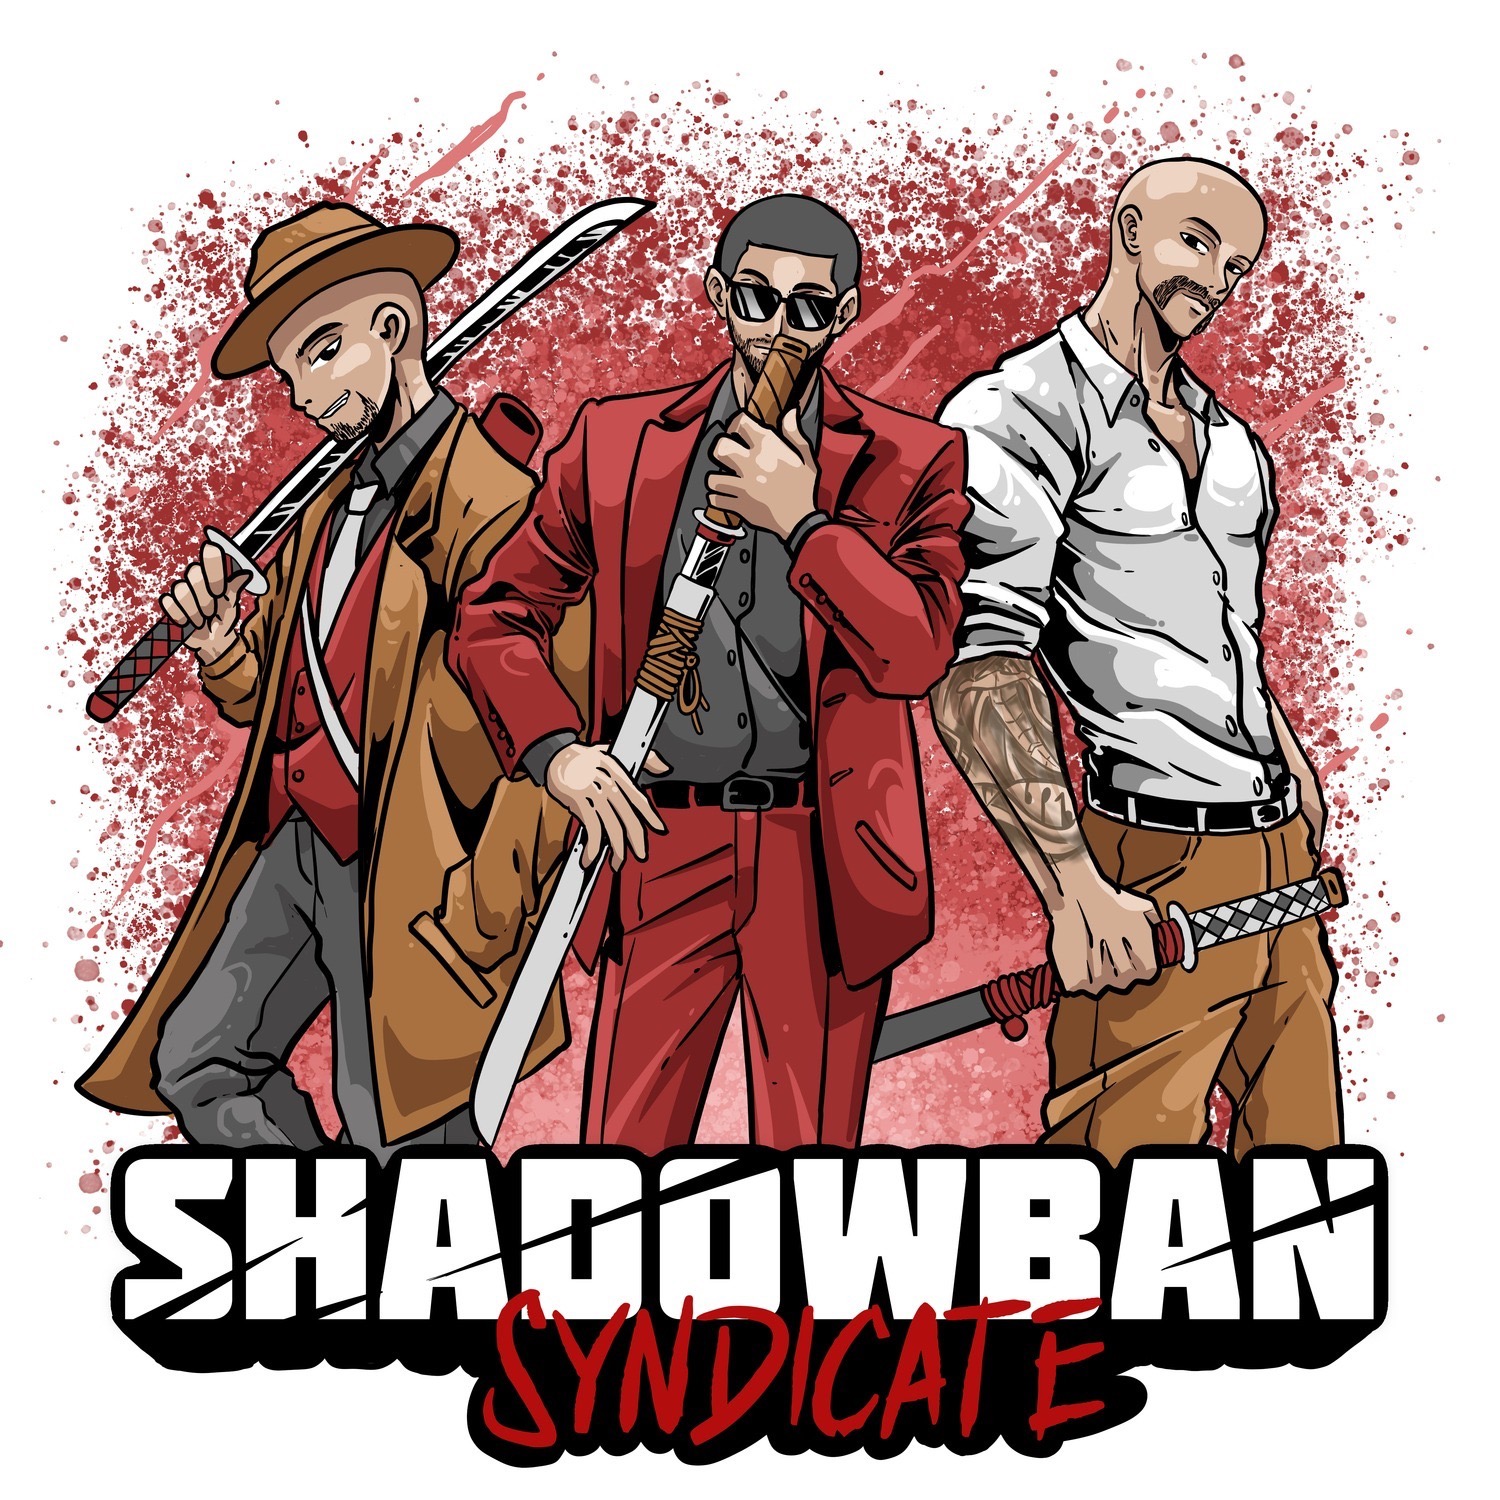 Shadowban Syndicate #7: 